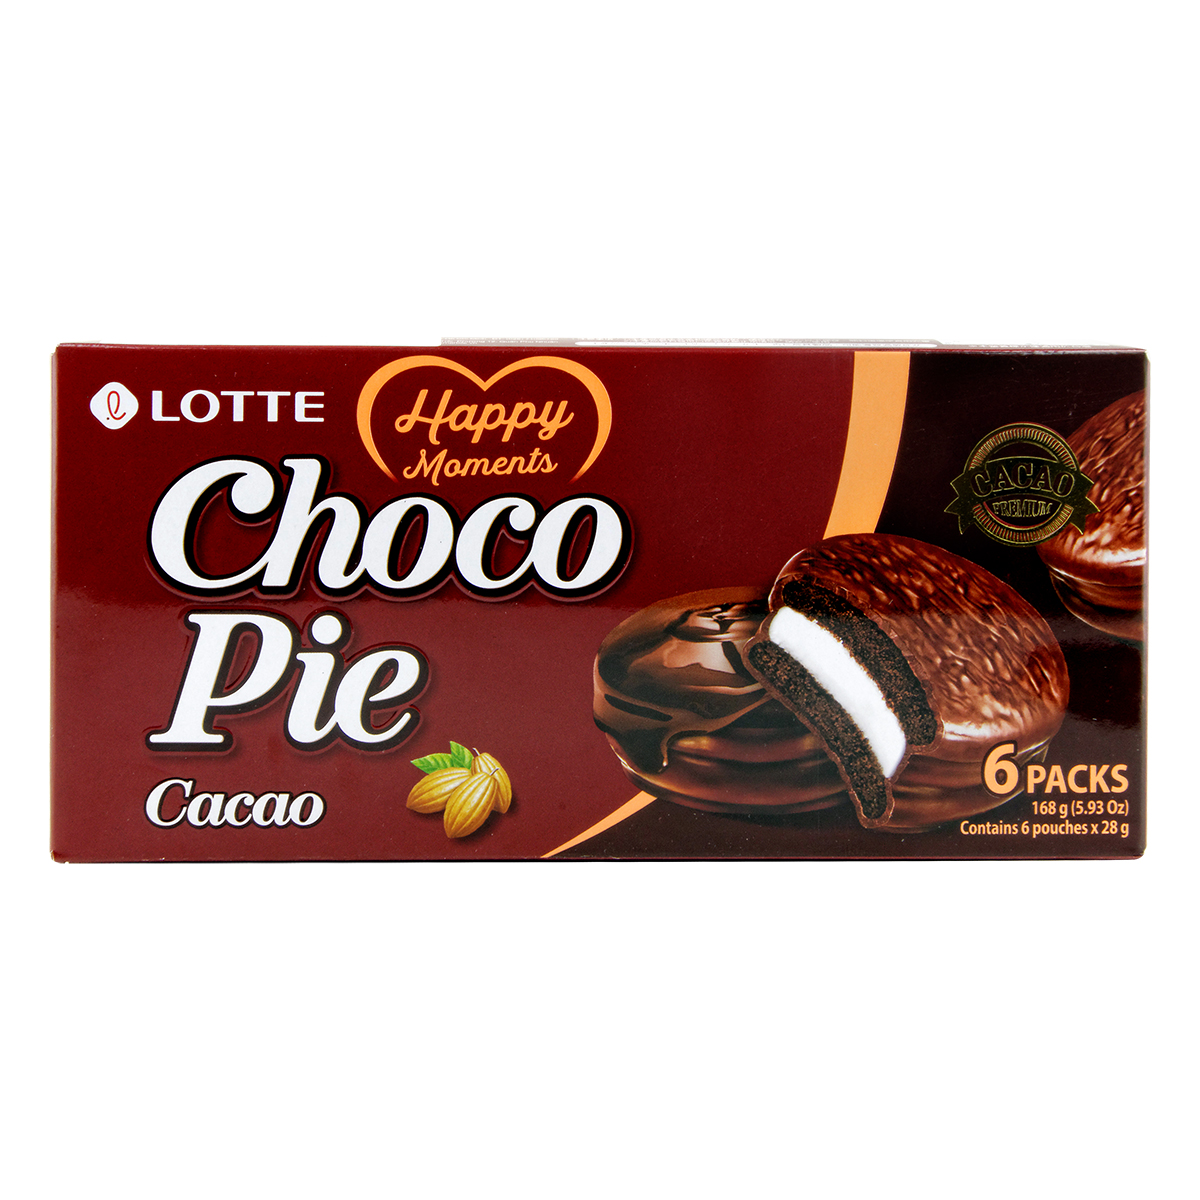 Dulciuri - Prajitura Choco Pie cu cacao LOTTE (6x28g) 168g, asianfood.ro